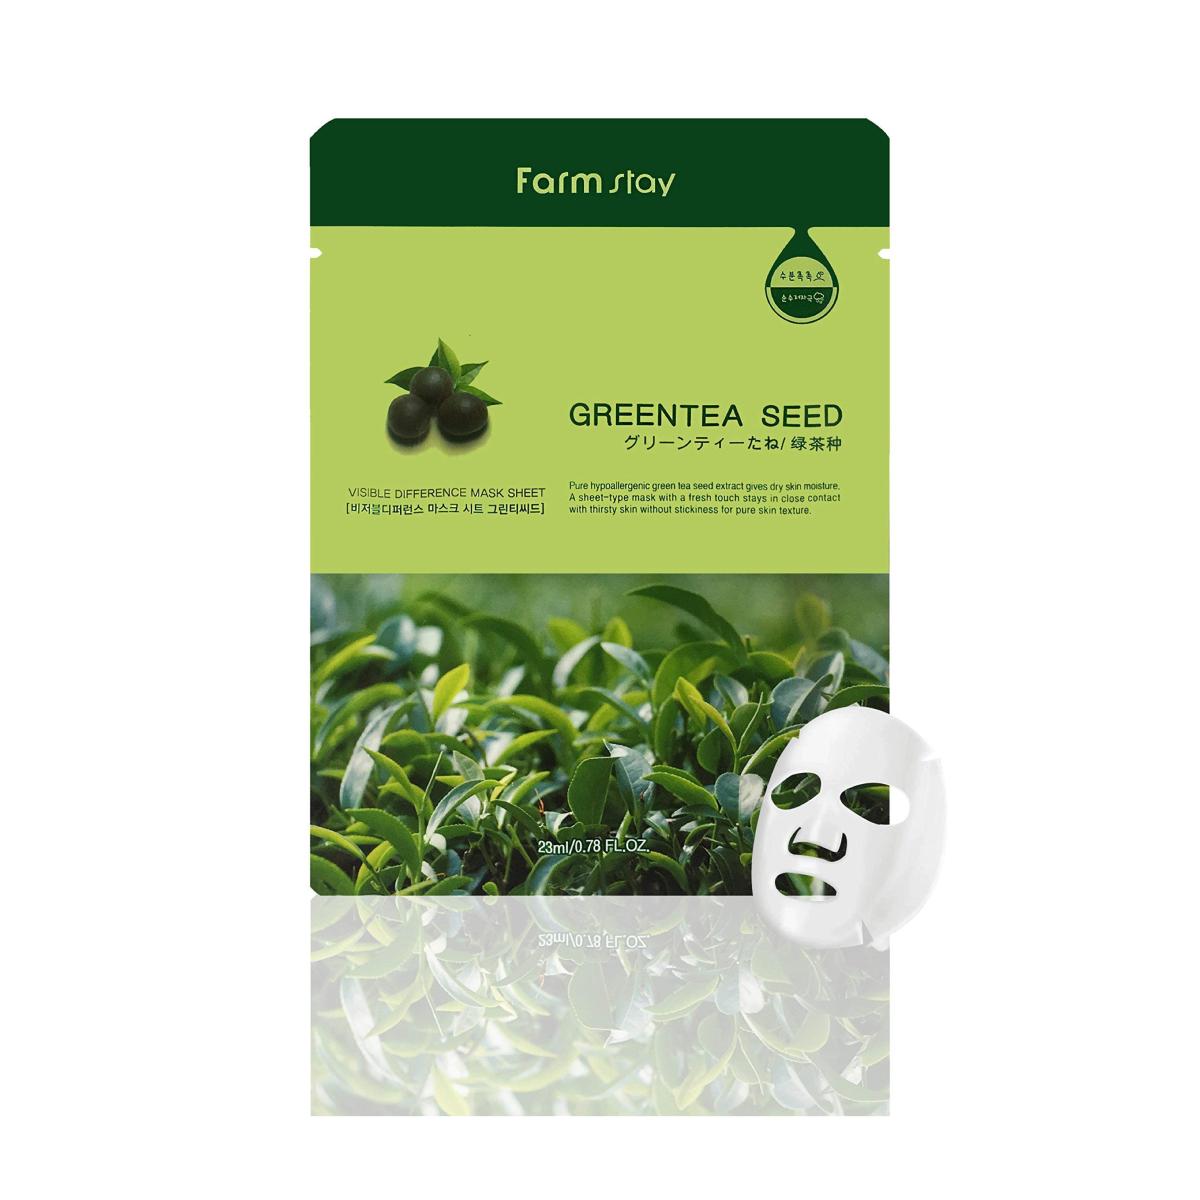 ماسک ورقه ای چای سبز - Green tea seed mask